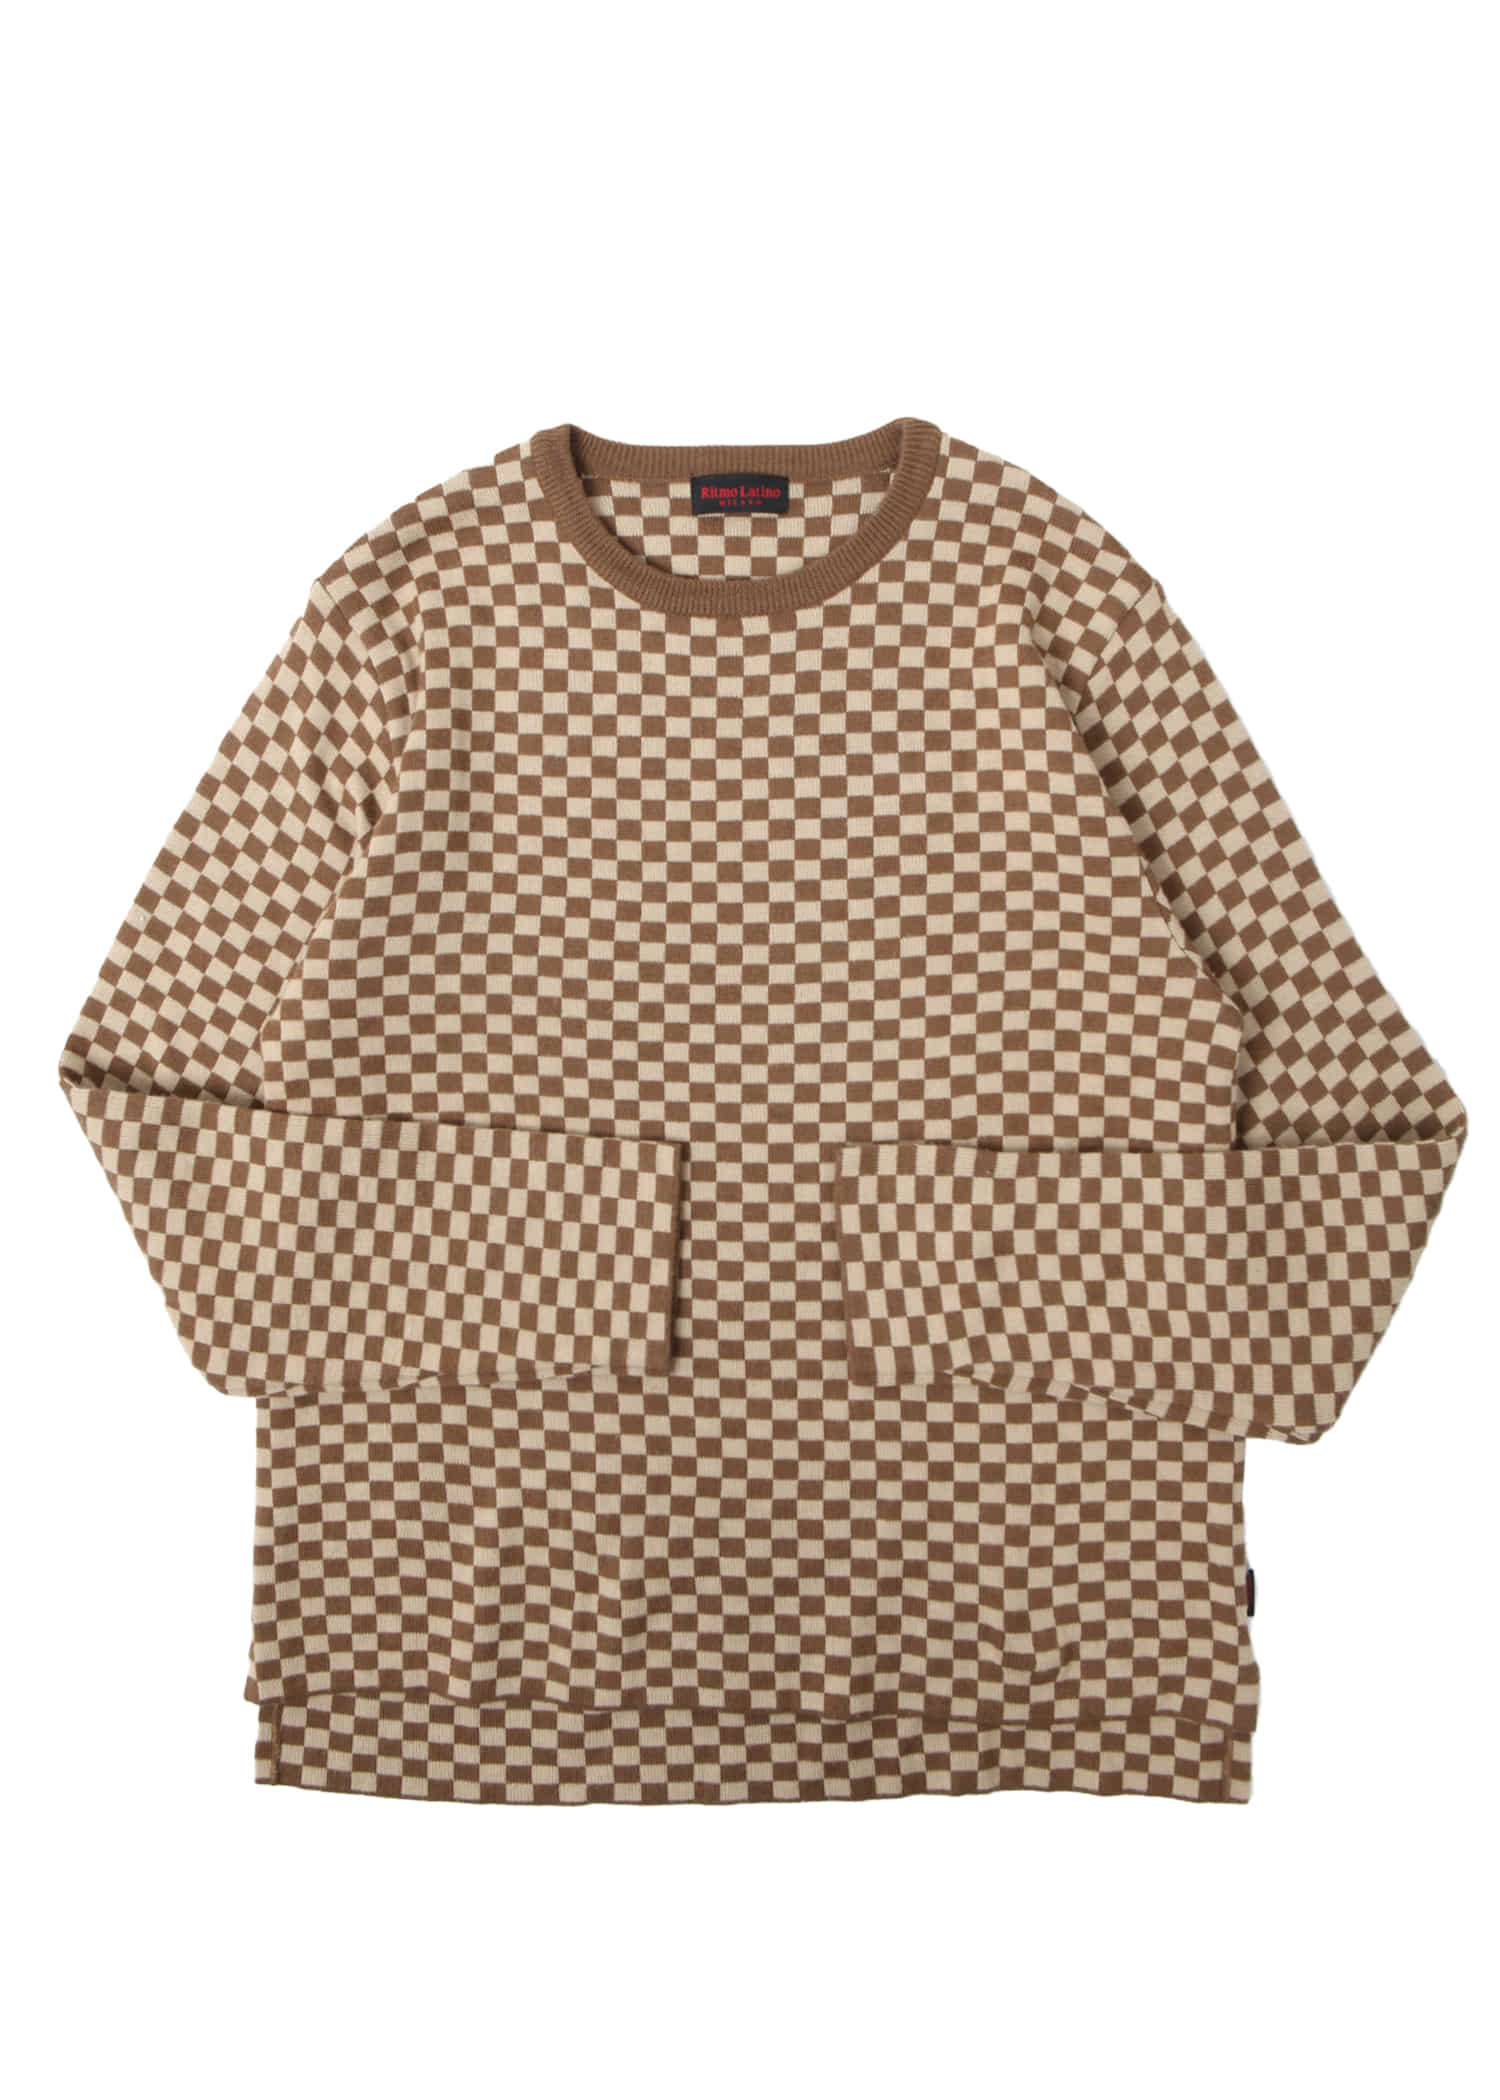 select vintage : checker board knit